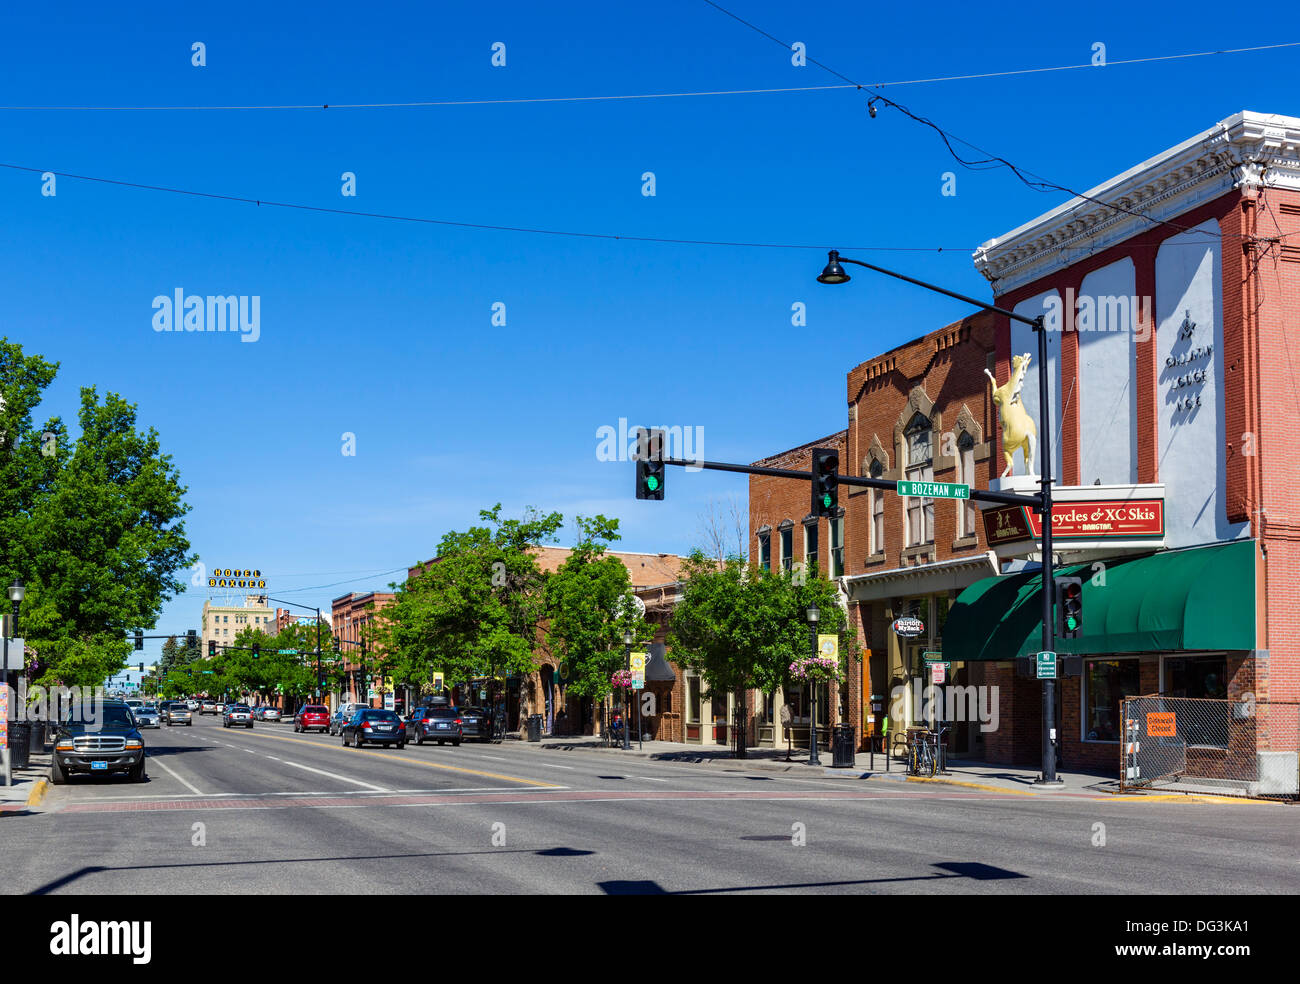 Main Street in downtown Bozeman looking towards the Hotel Baxter, Montana, USA Stock Photo